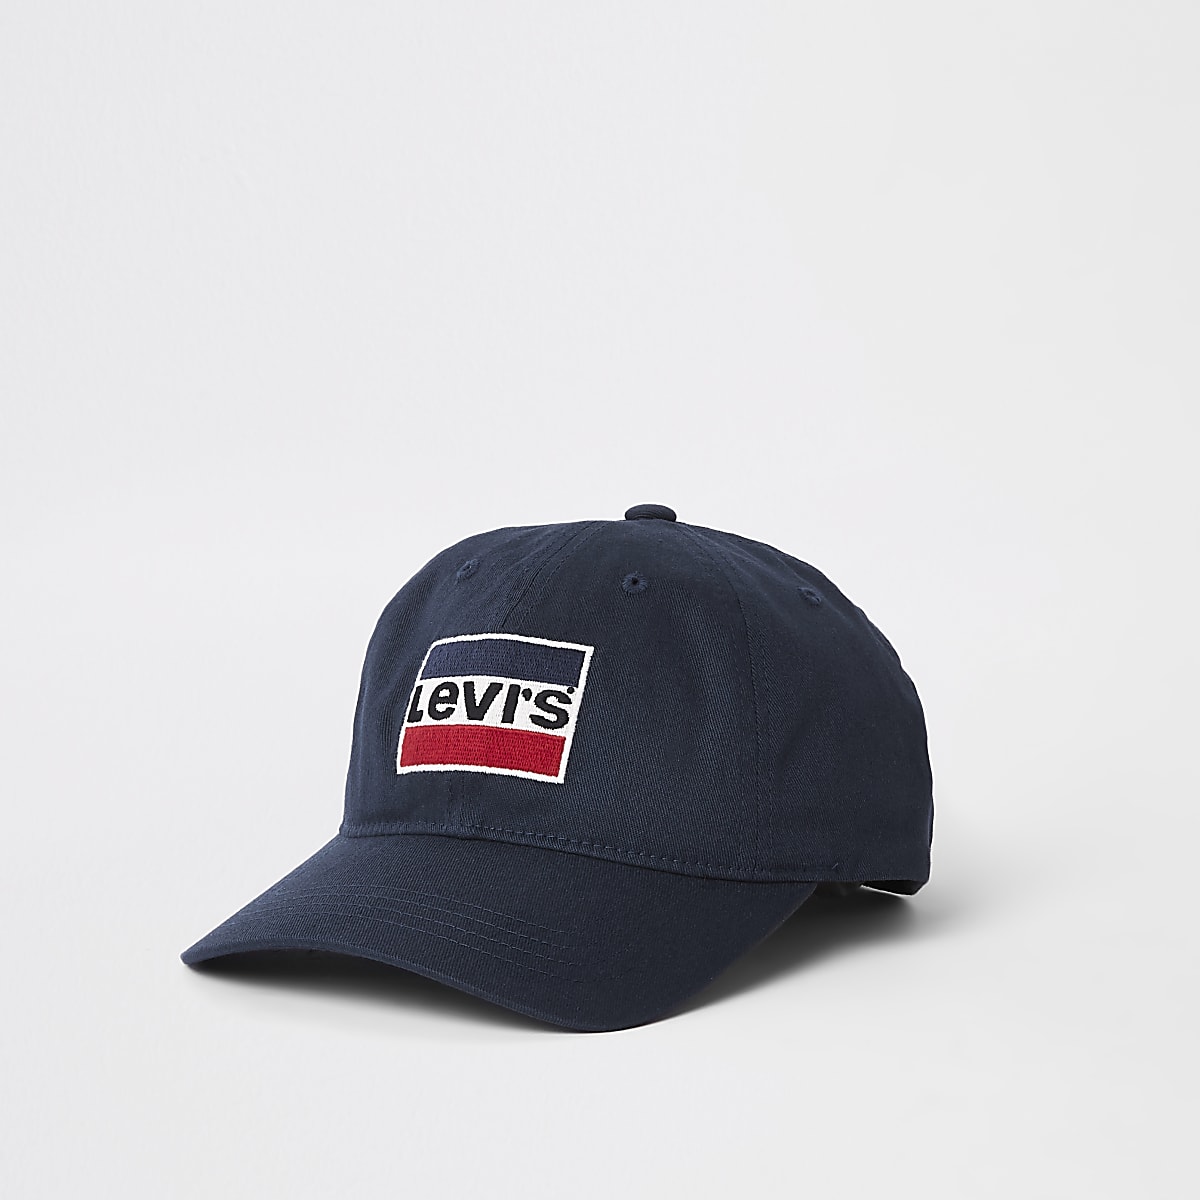 Levi’s navy embroidered baseball cap - Hats / Caps - Accessories - men